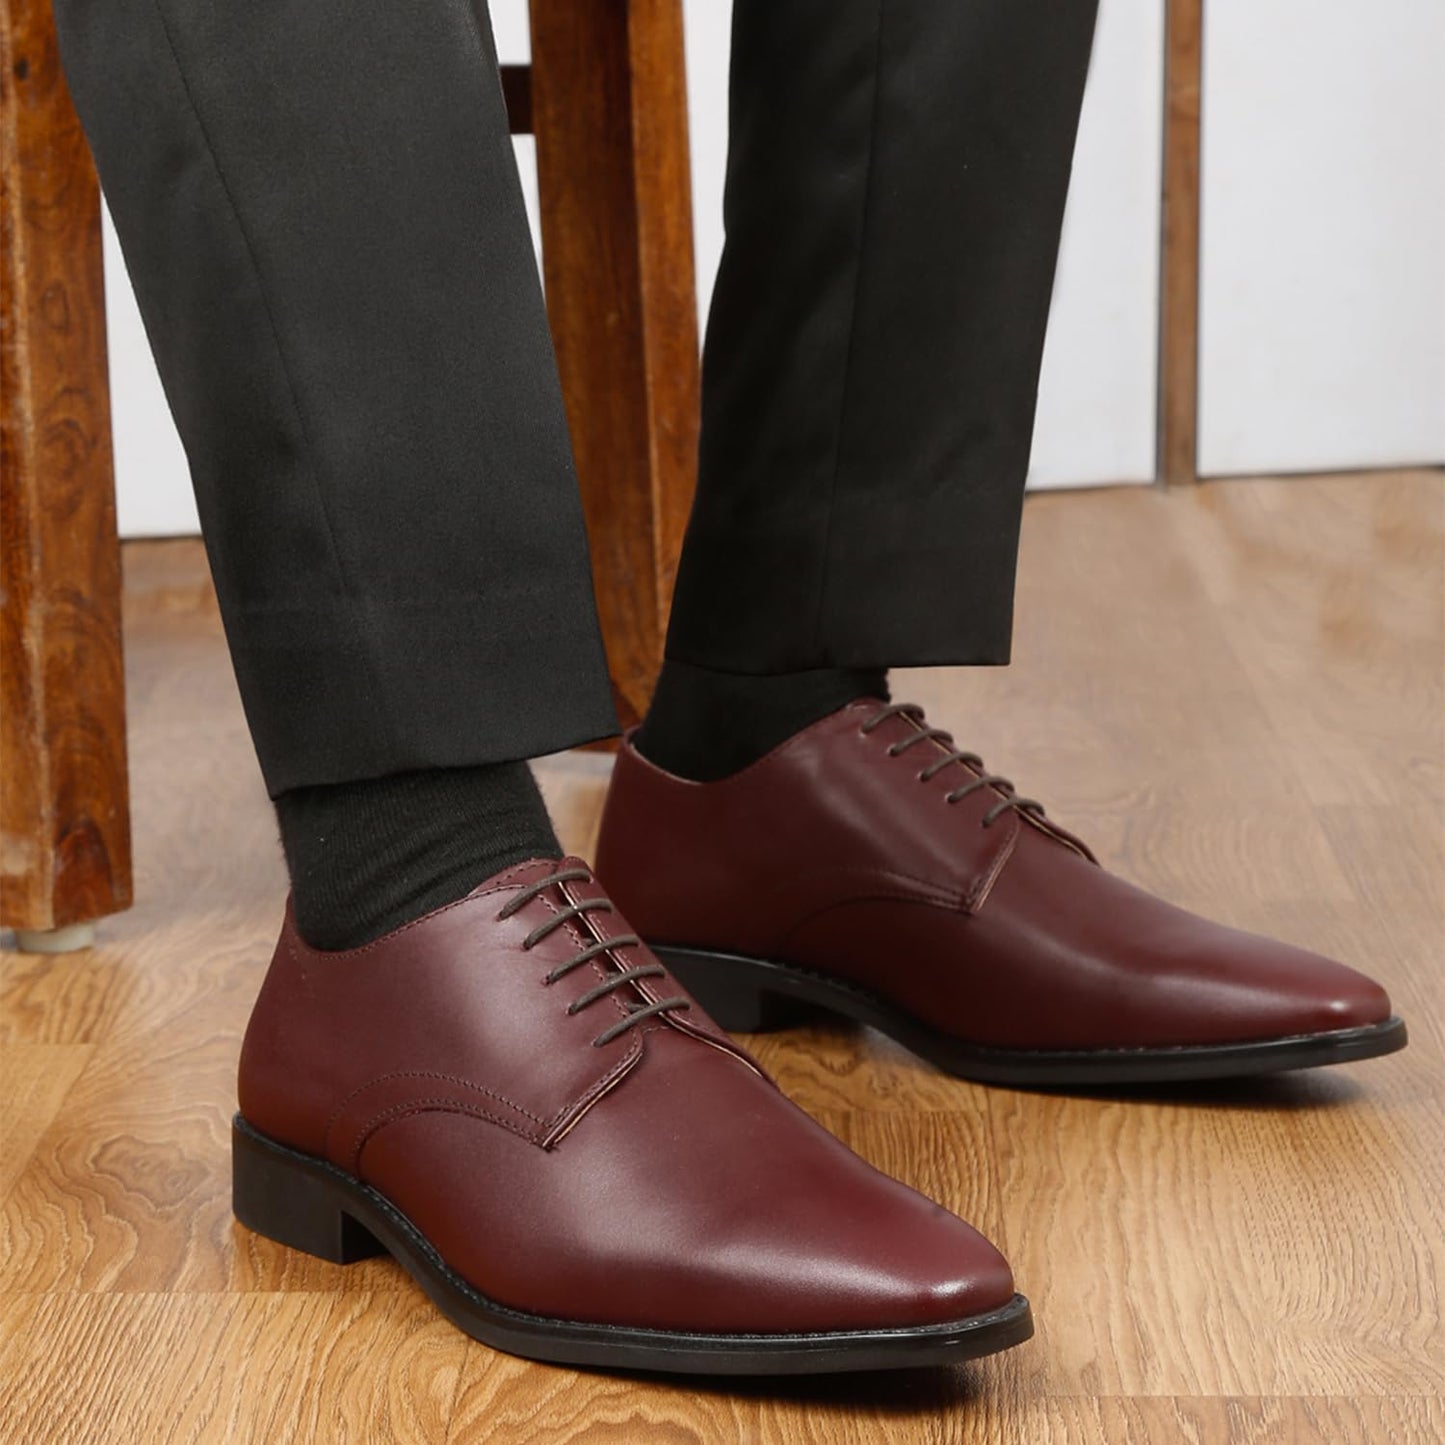 LOUIS STITCH Men's Handmade Rosewood Derby Formal Lace Up Shoes for Men (LSRXPLRW) - UK 8